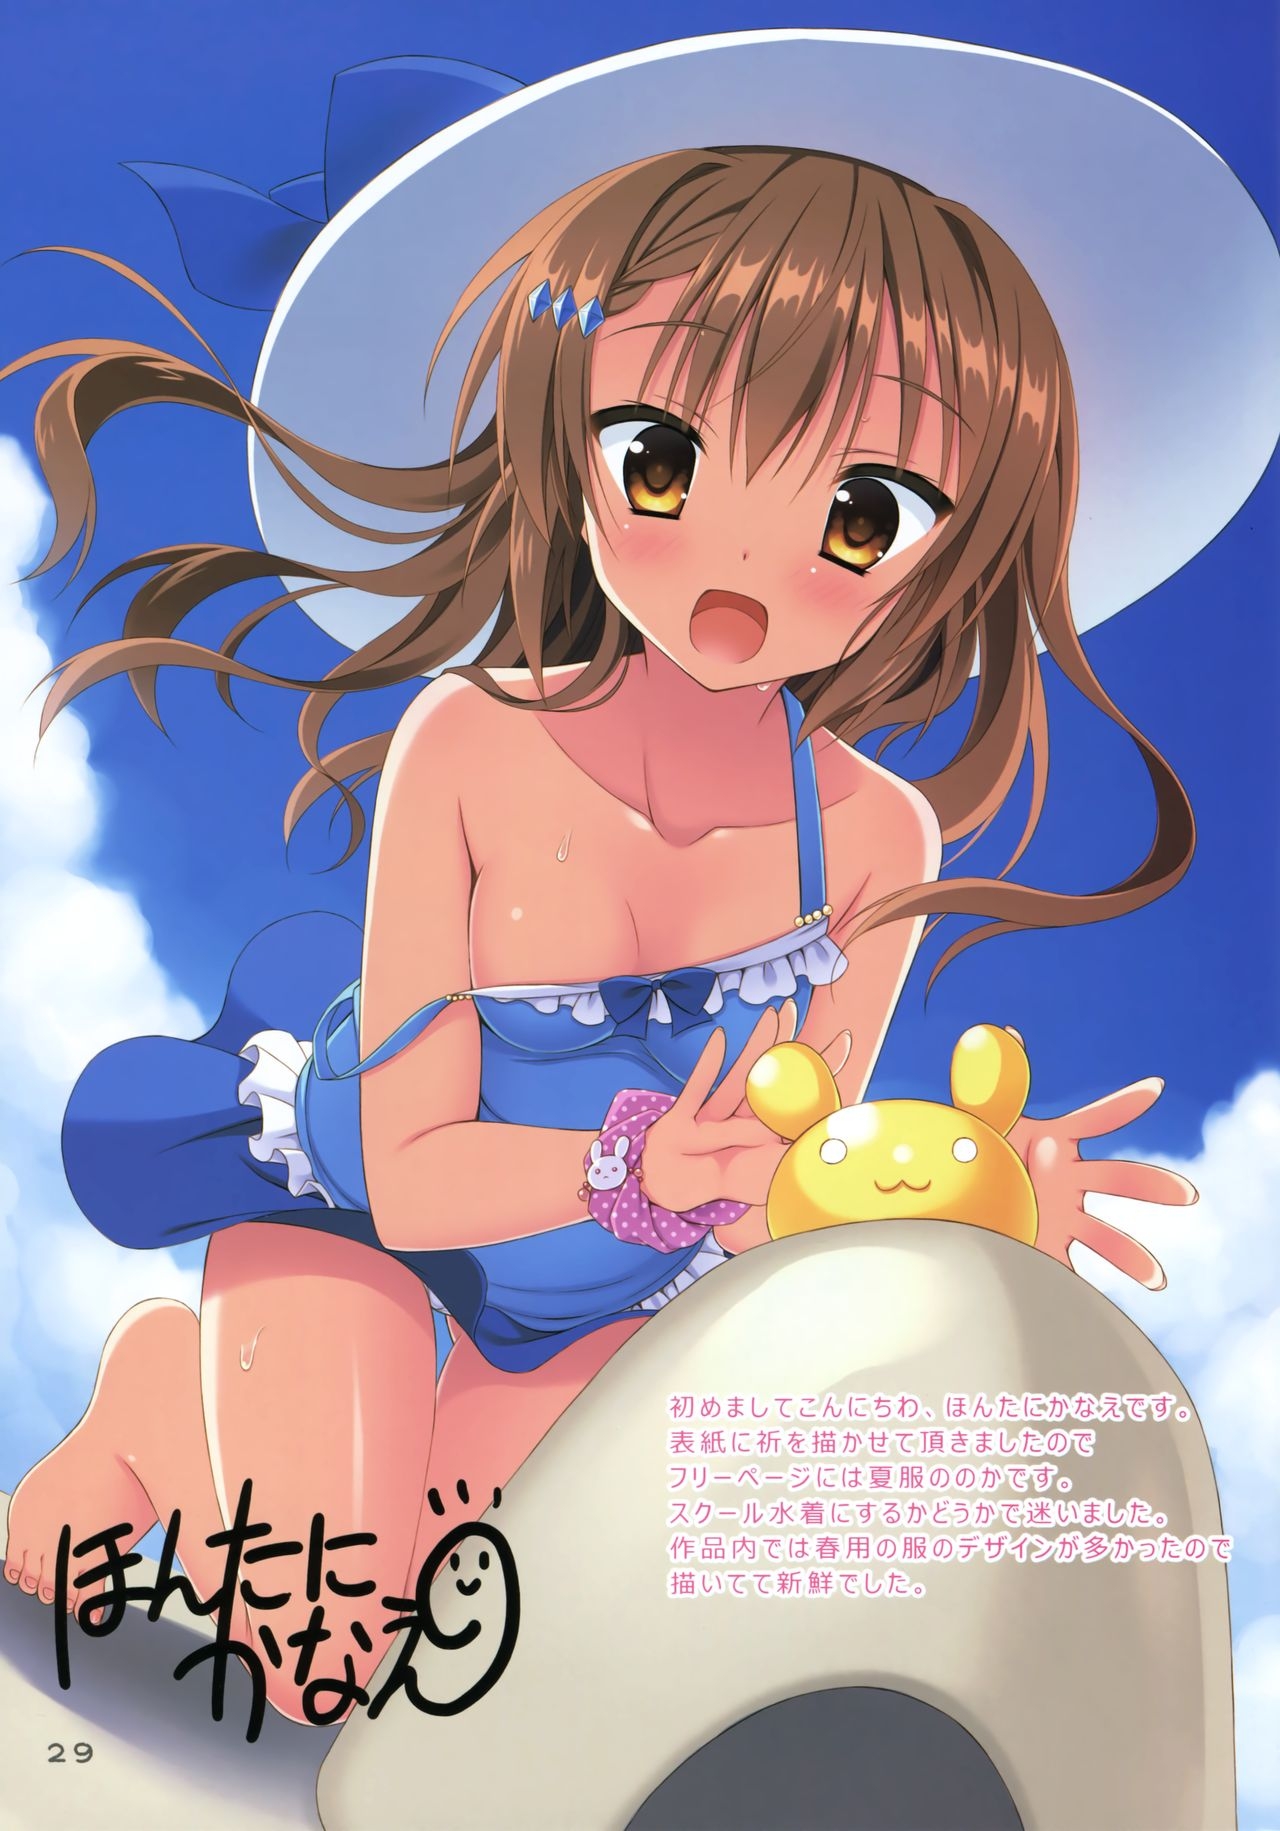 [Saga Planets] Enjoy Spring Book - Hanasaki Work Spring! Settei Gengashuu [Incomplete] 8